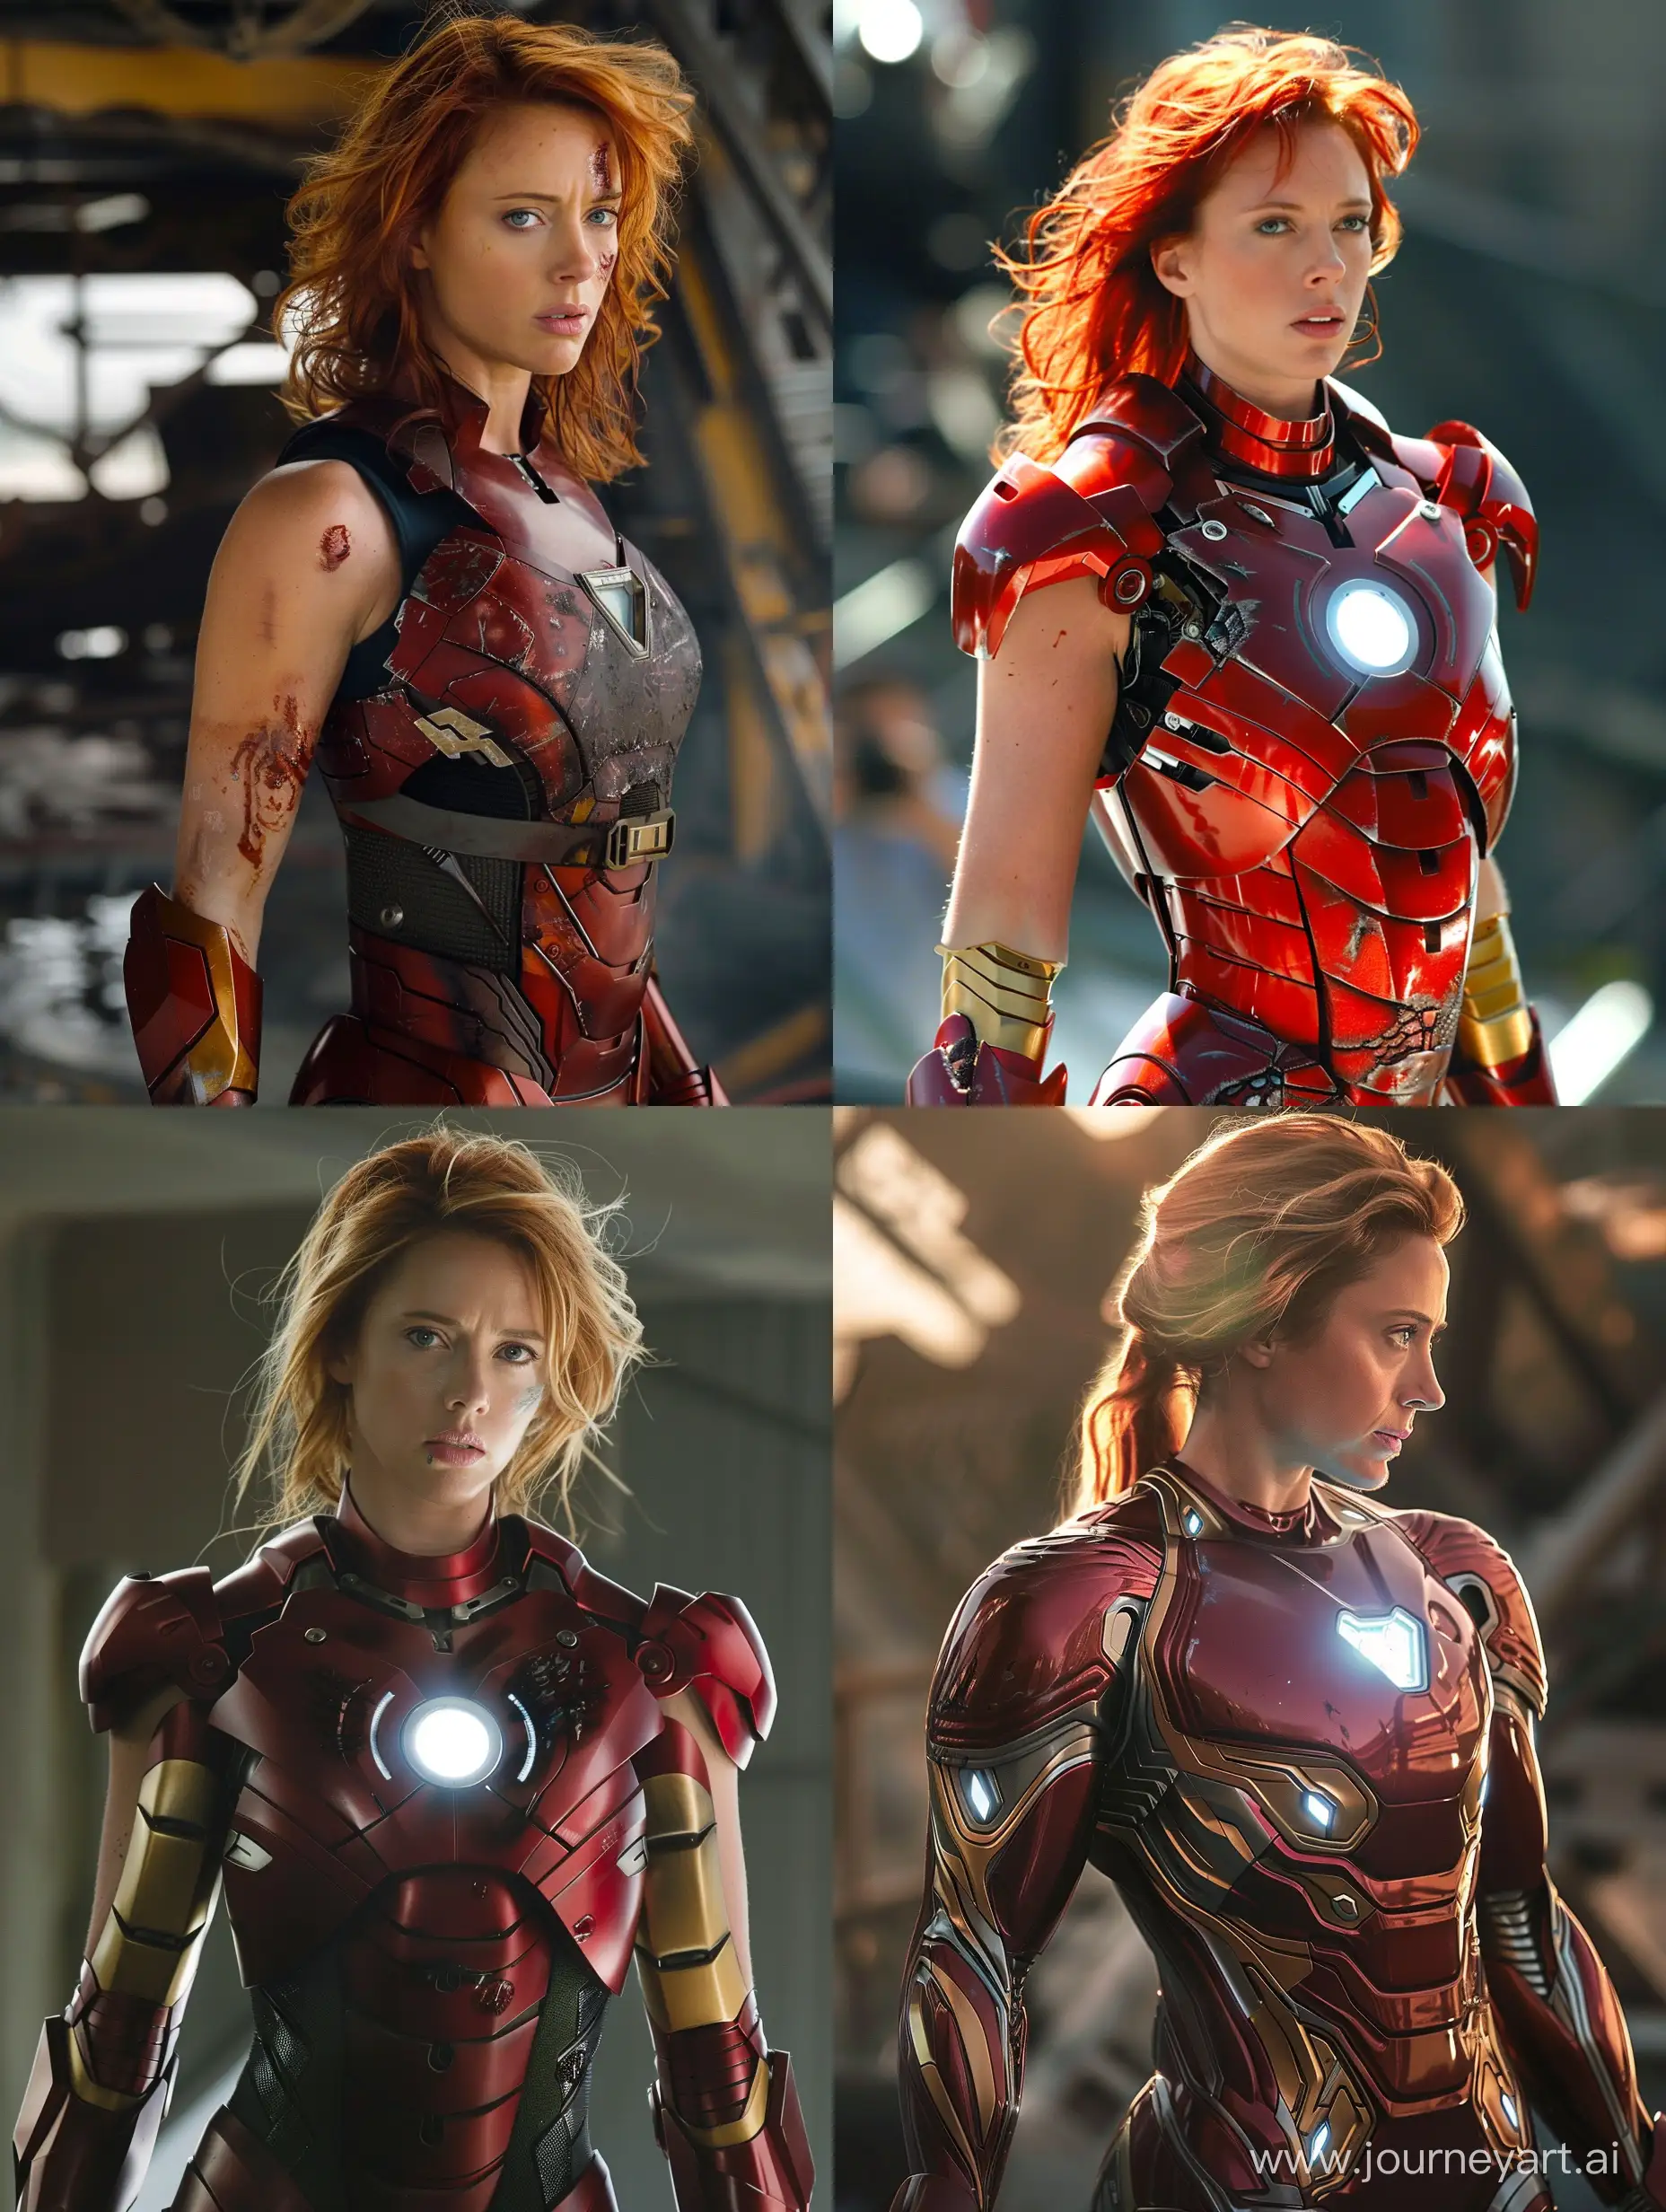 Scarlett-Johansson-Transforms-into-Iron-Man-Dynamic-Portrait-of-Heroic-Evolution